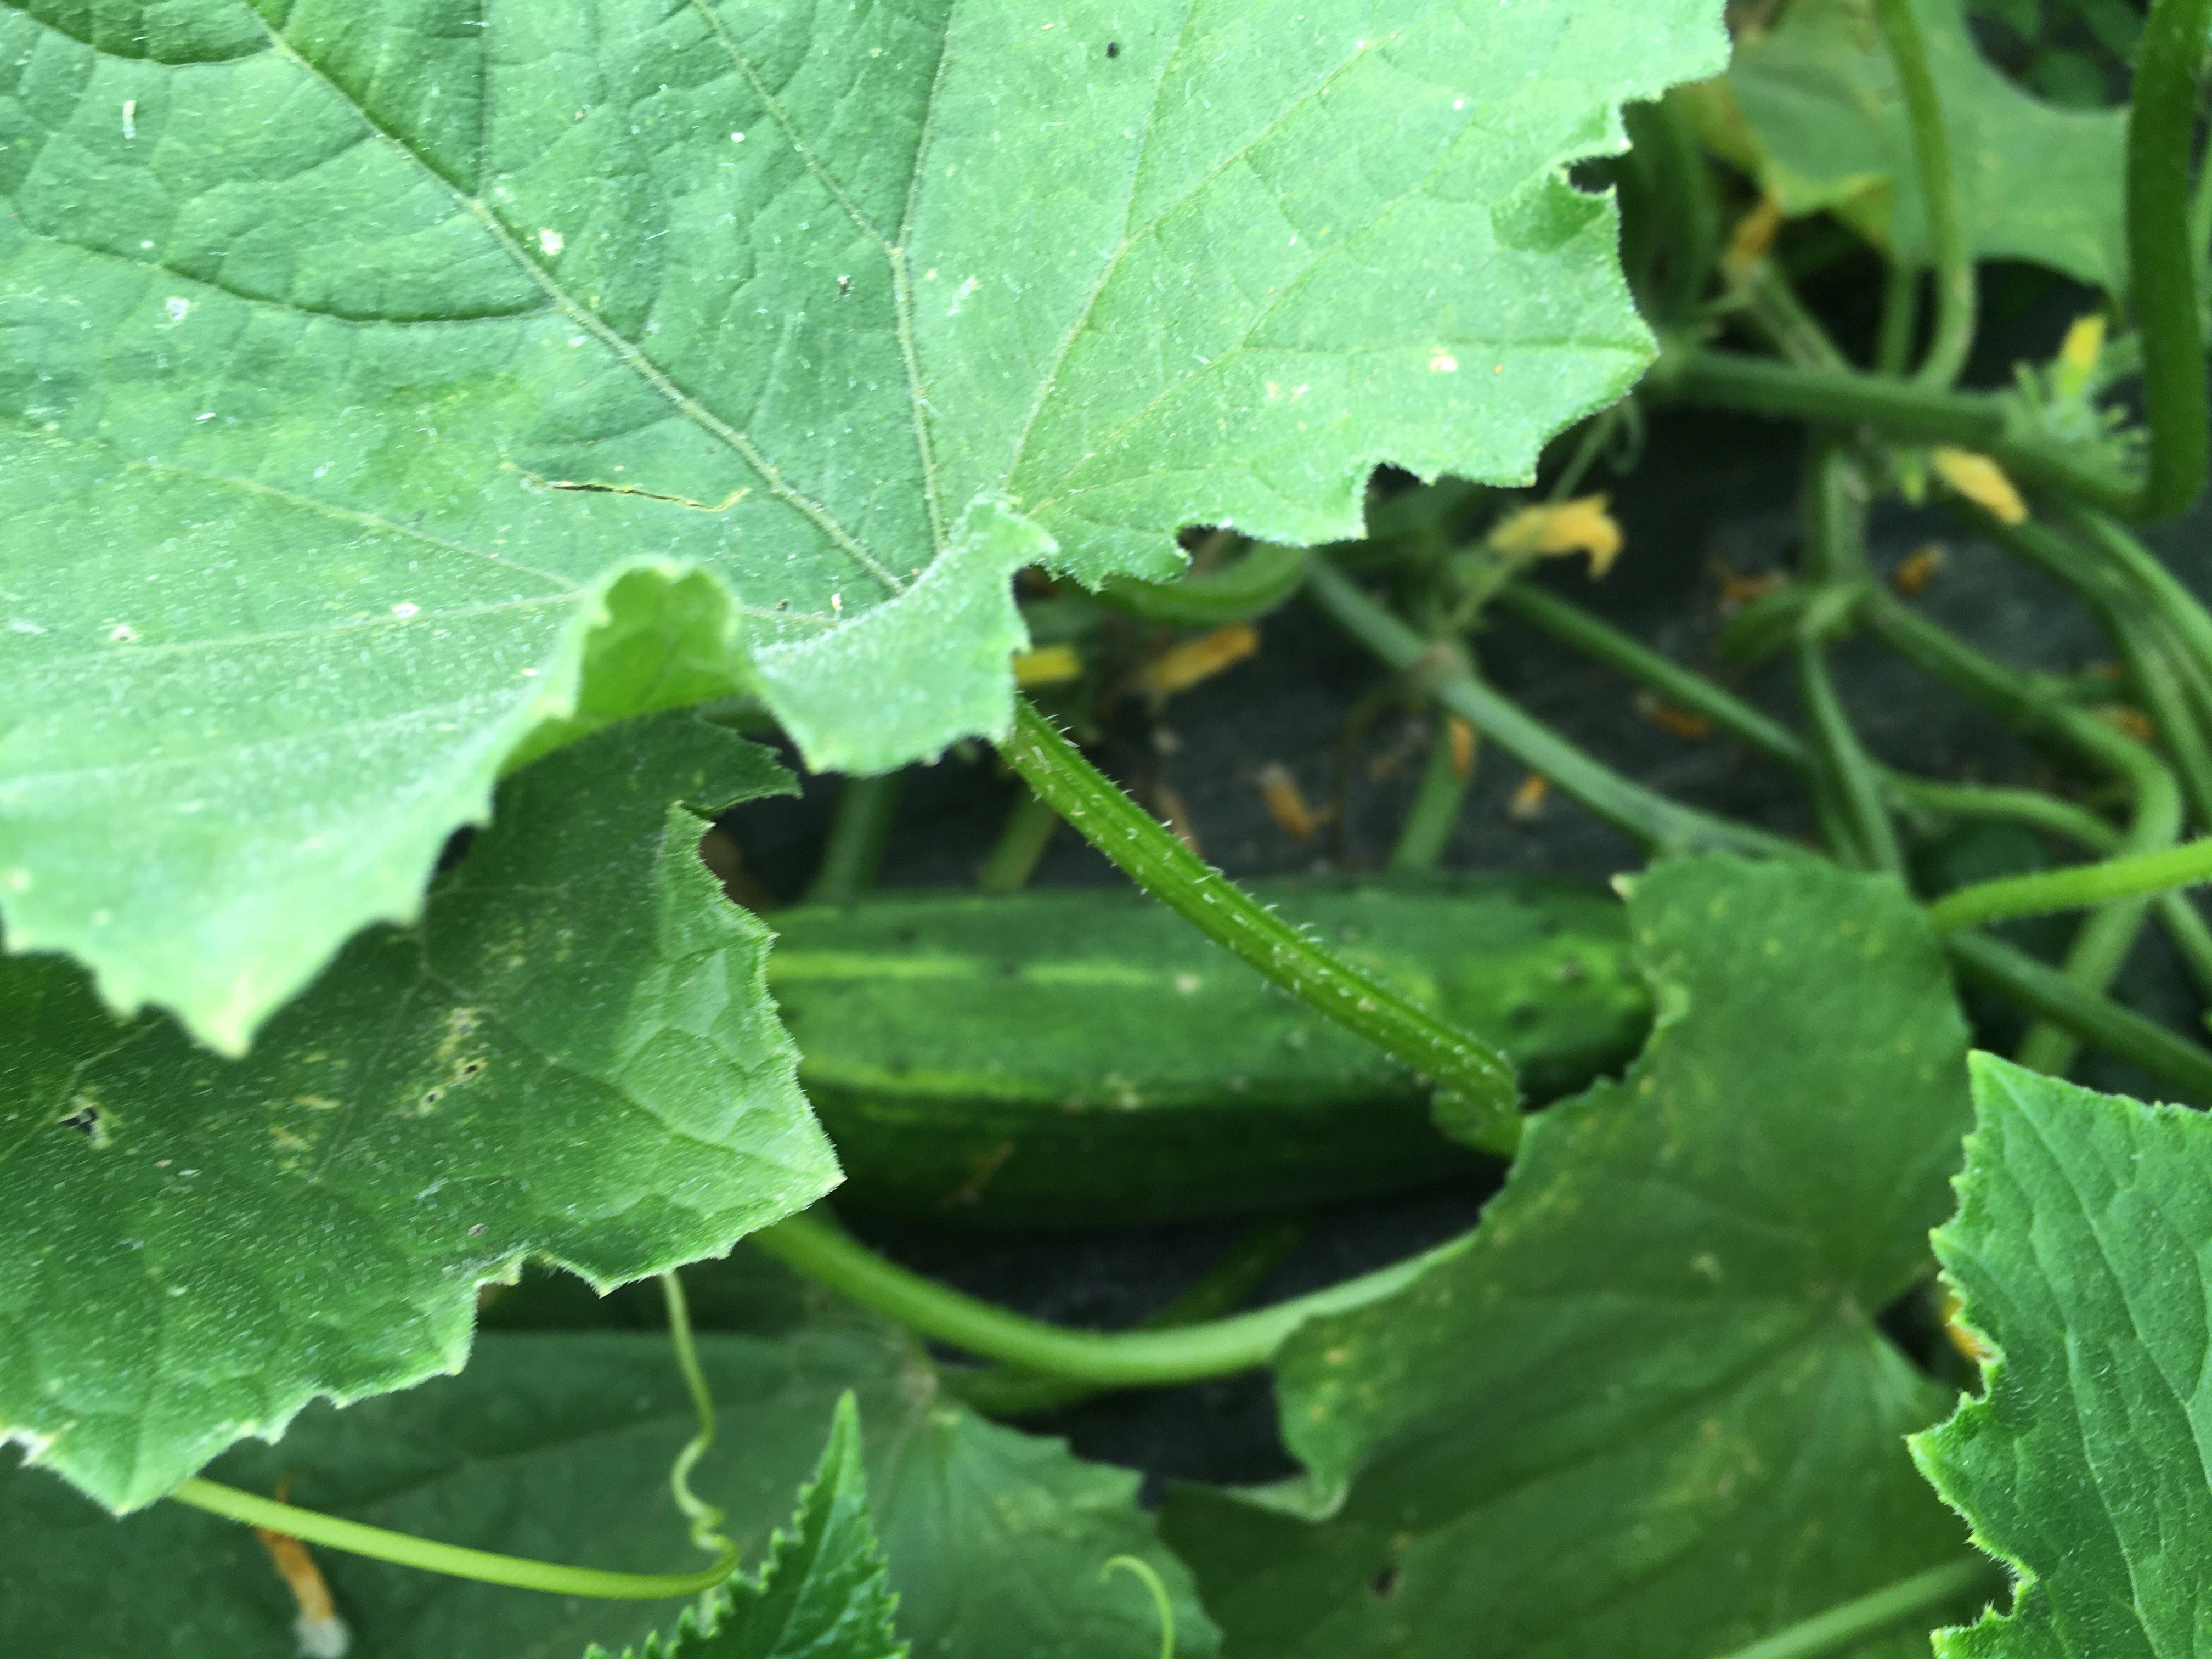 Previous Happening: Cucumbers Grow Their Own Sun Umbrellas